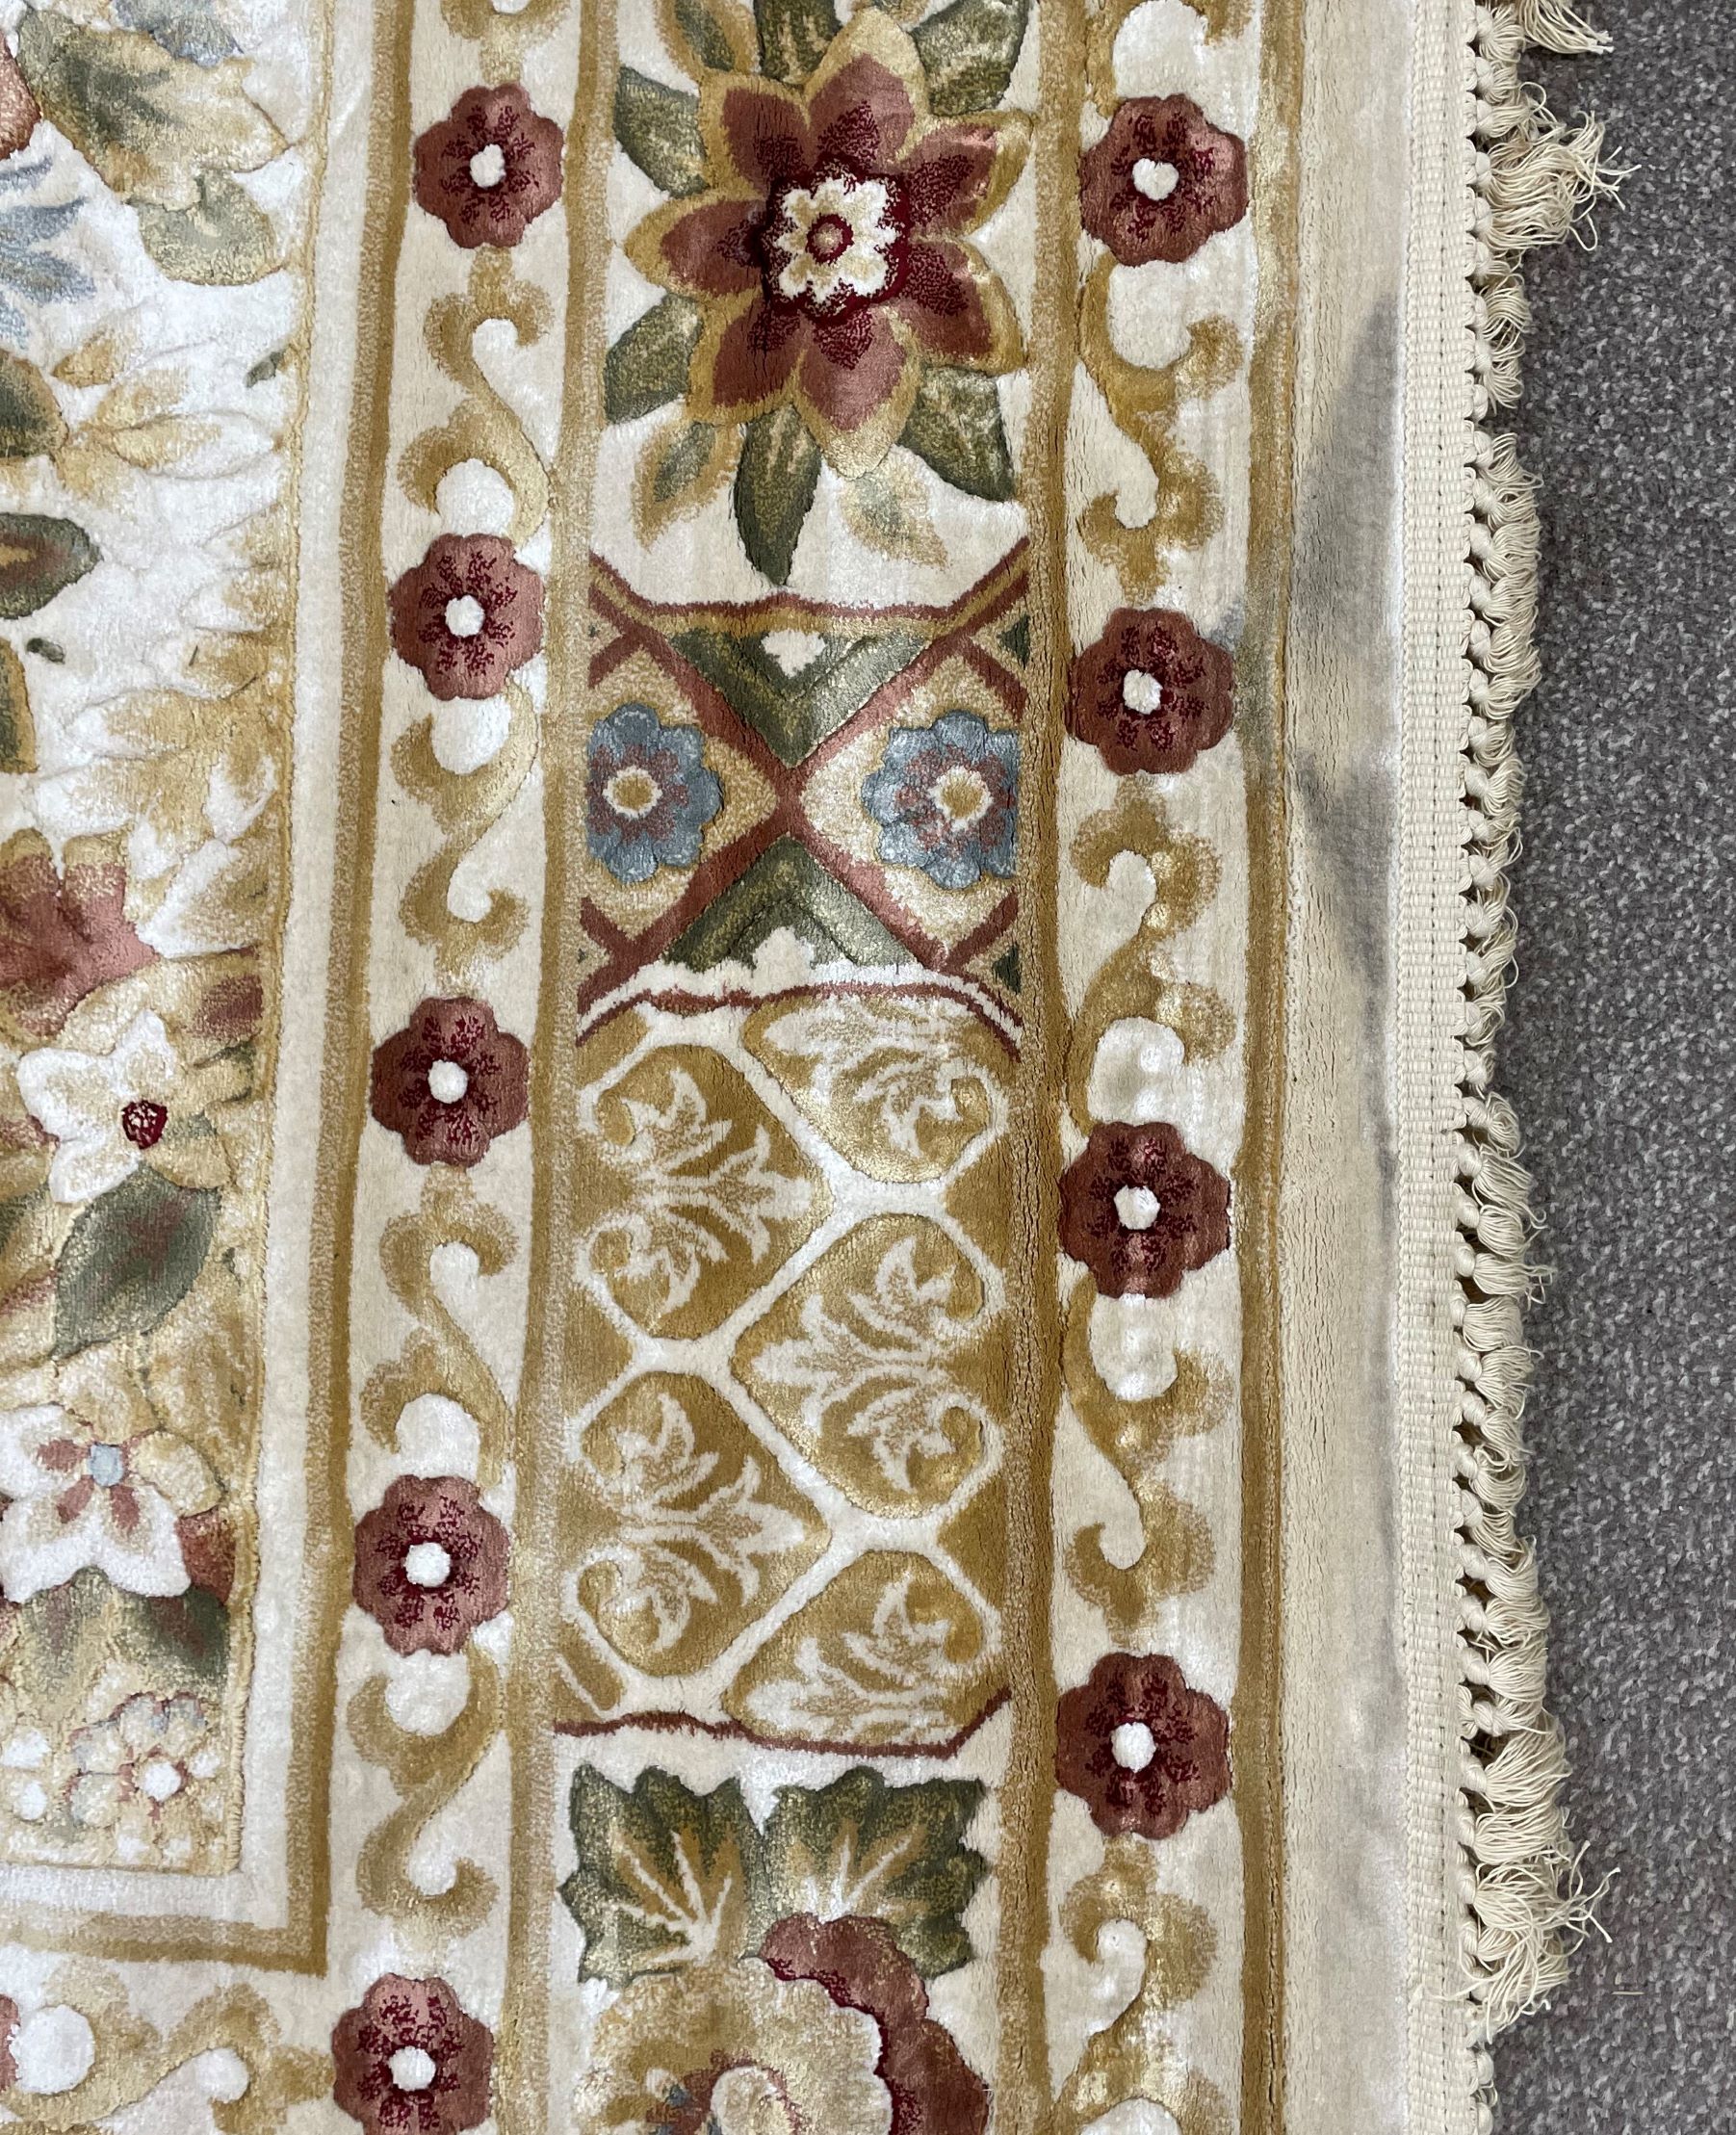 Gold & cream ground full pile Oriental carpet 350cm by 240cm - Image 6 of 8